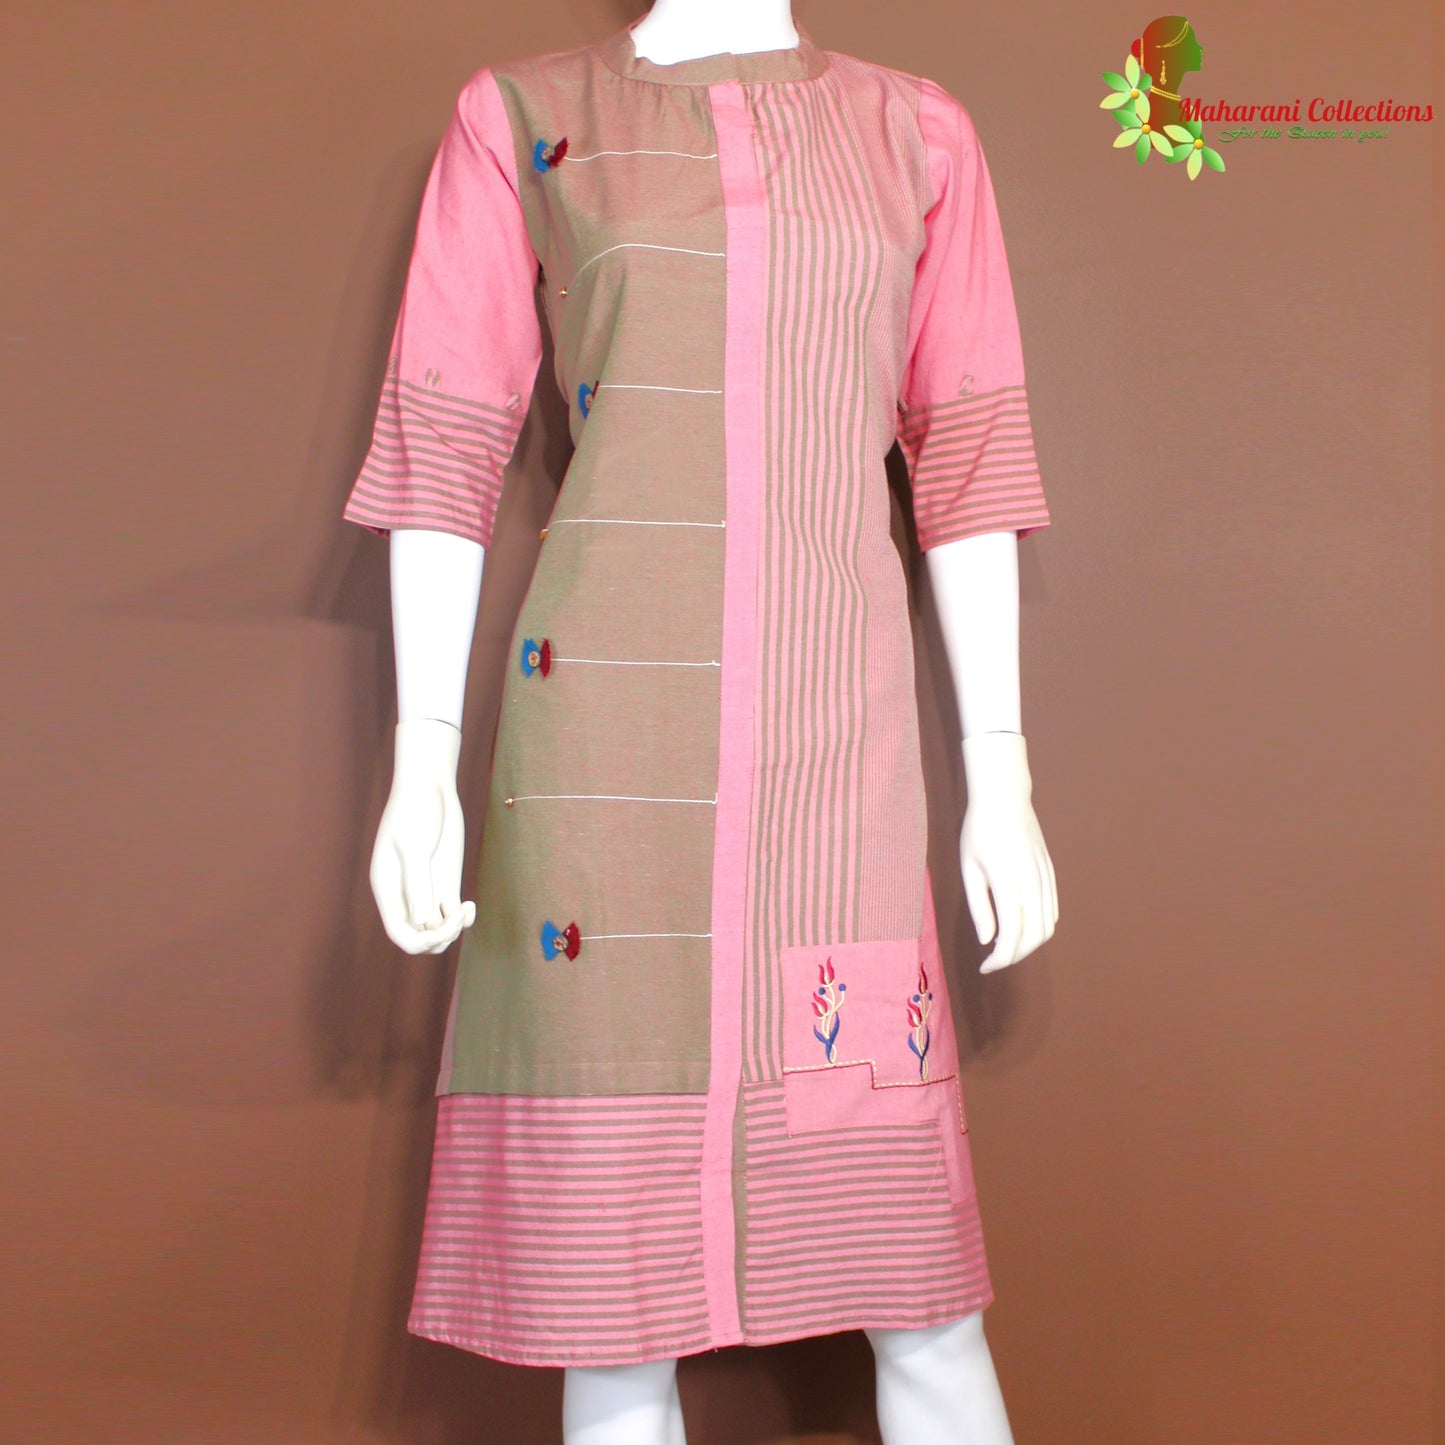 Maharani's Soft Cotton Short Dress - Pink (S)